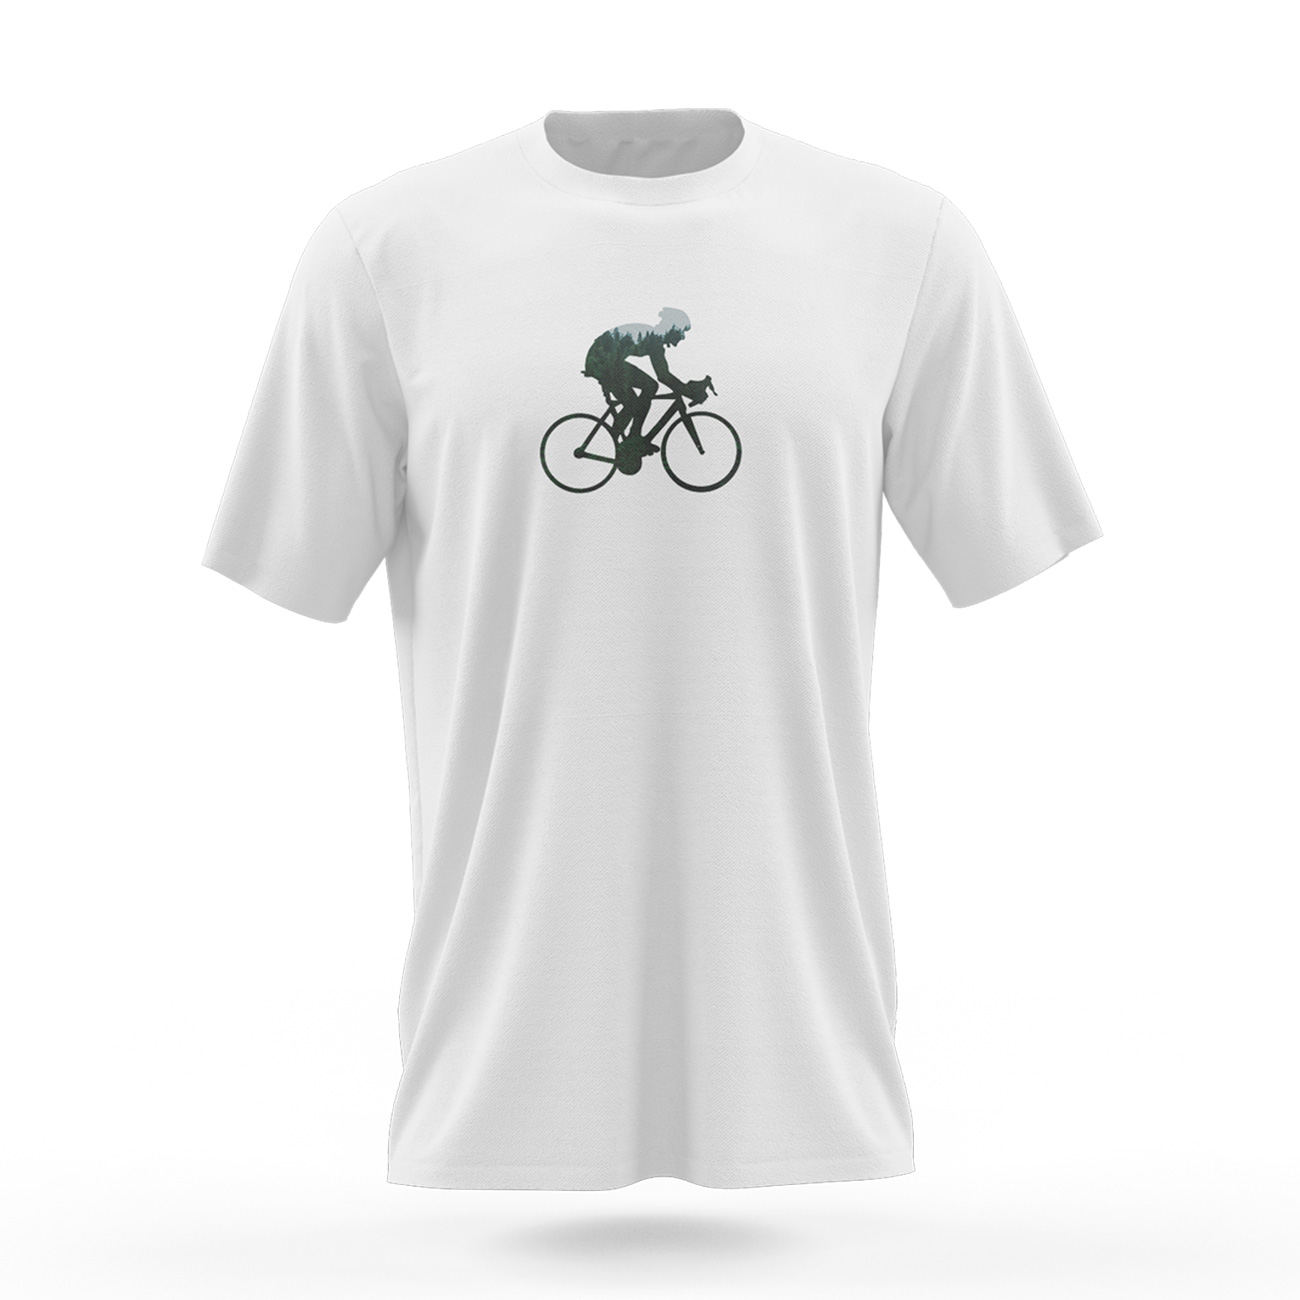 
                NU. BY HOLOKOLO Cyklistické triko s krátkým rukávem - BEHIND BARS - zelená/bílá 3XL
            